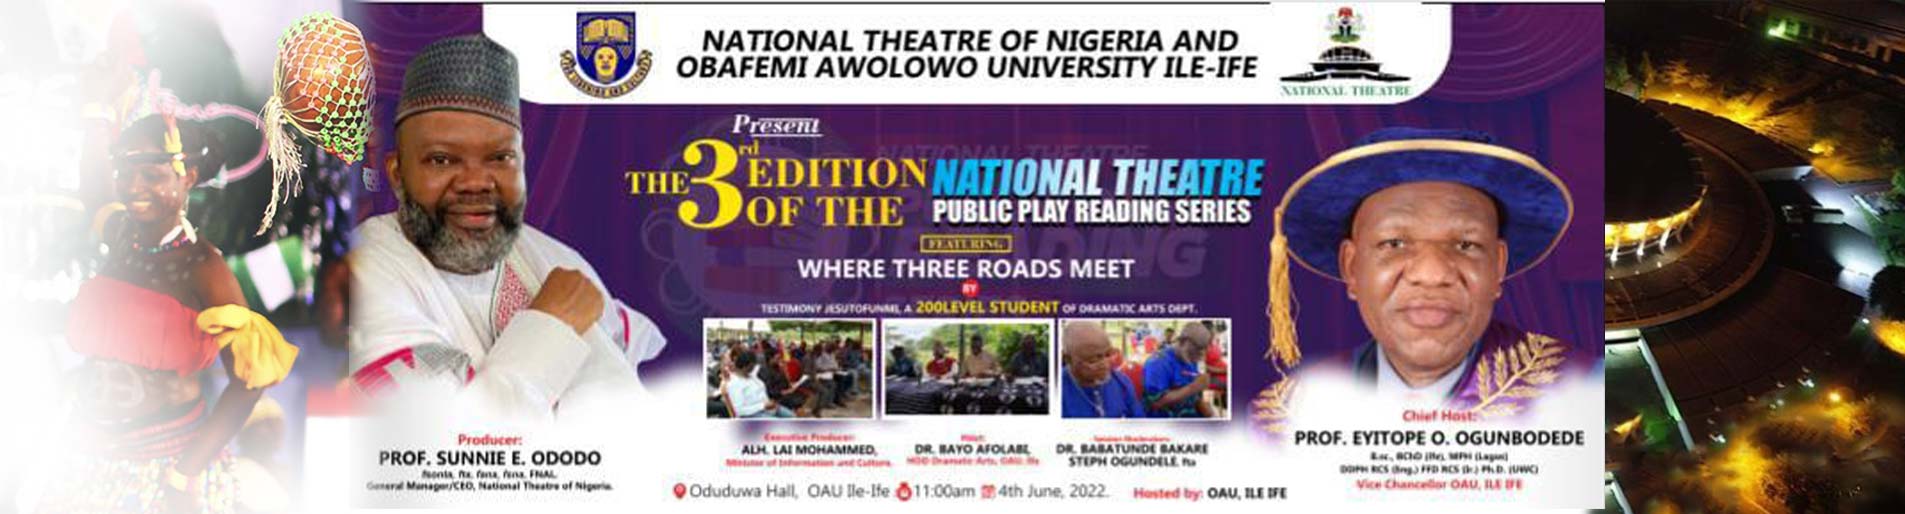 slider-Nationaltheatre-Playearding-Obafemi-Awolowo-University